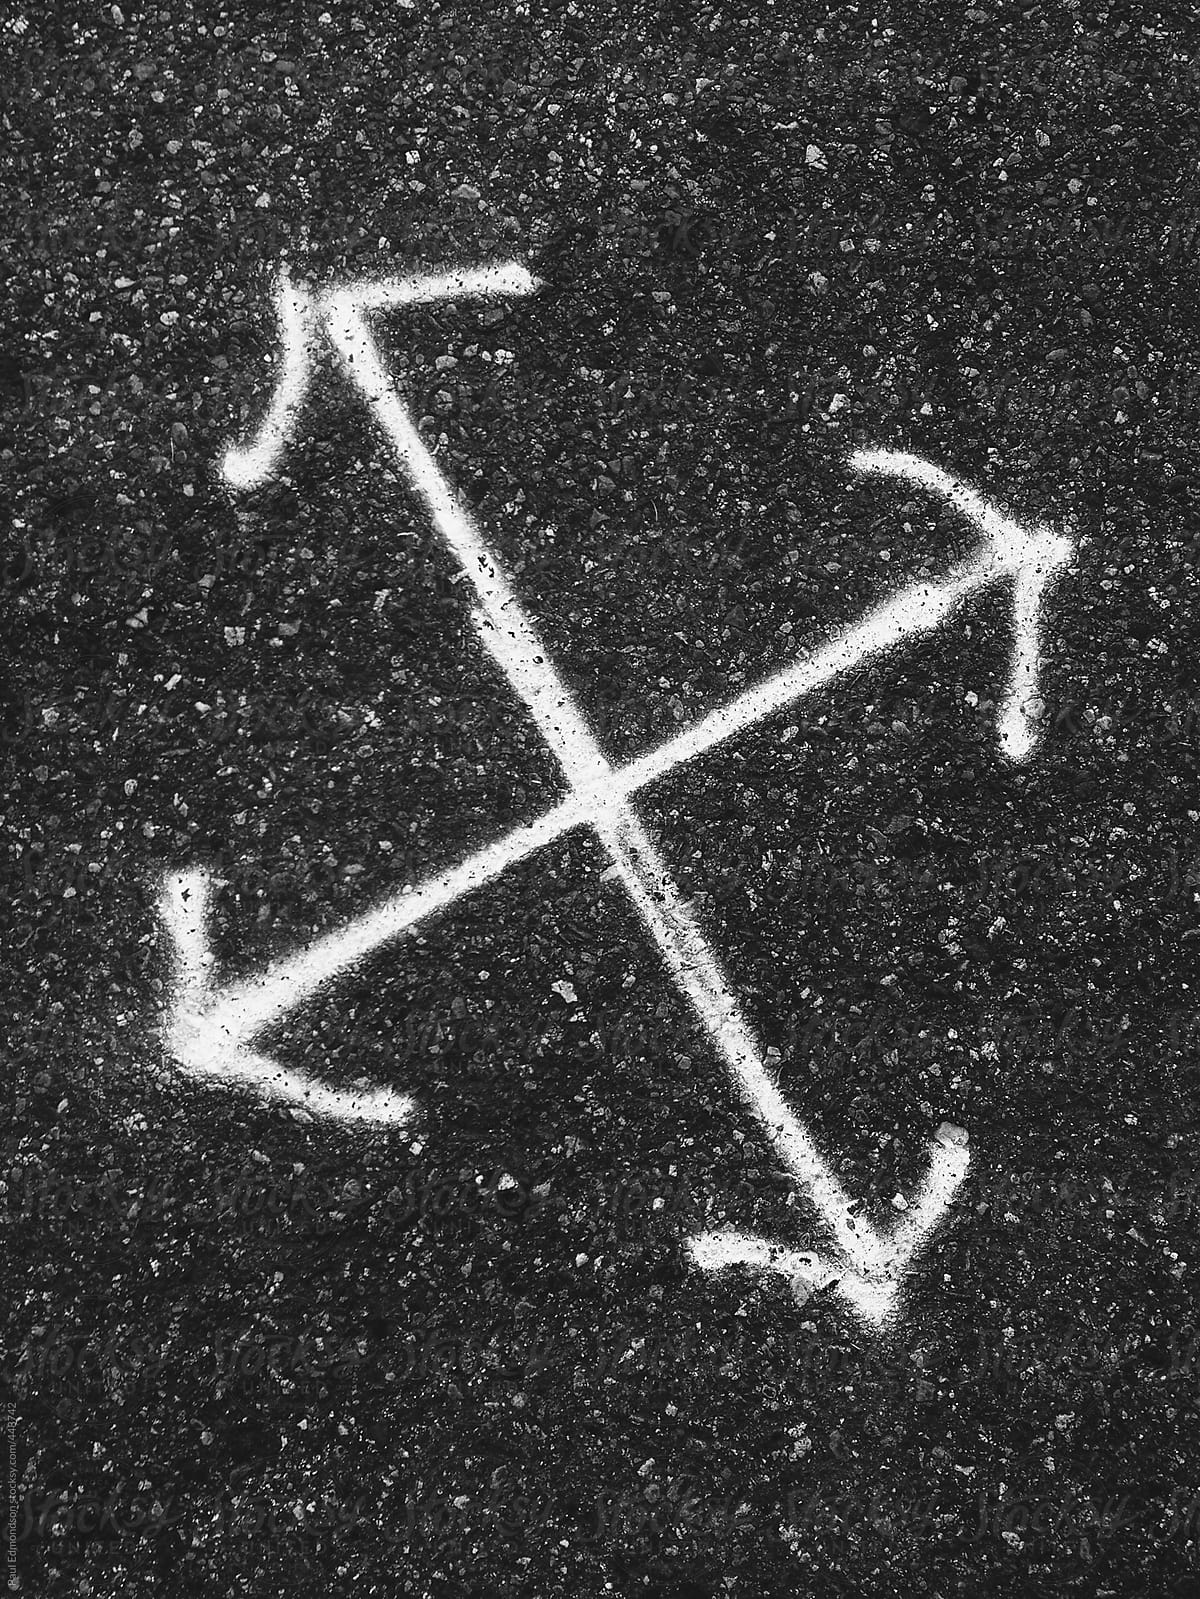 Directional arrows spray painted on urban street